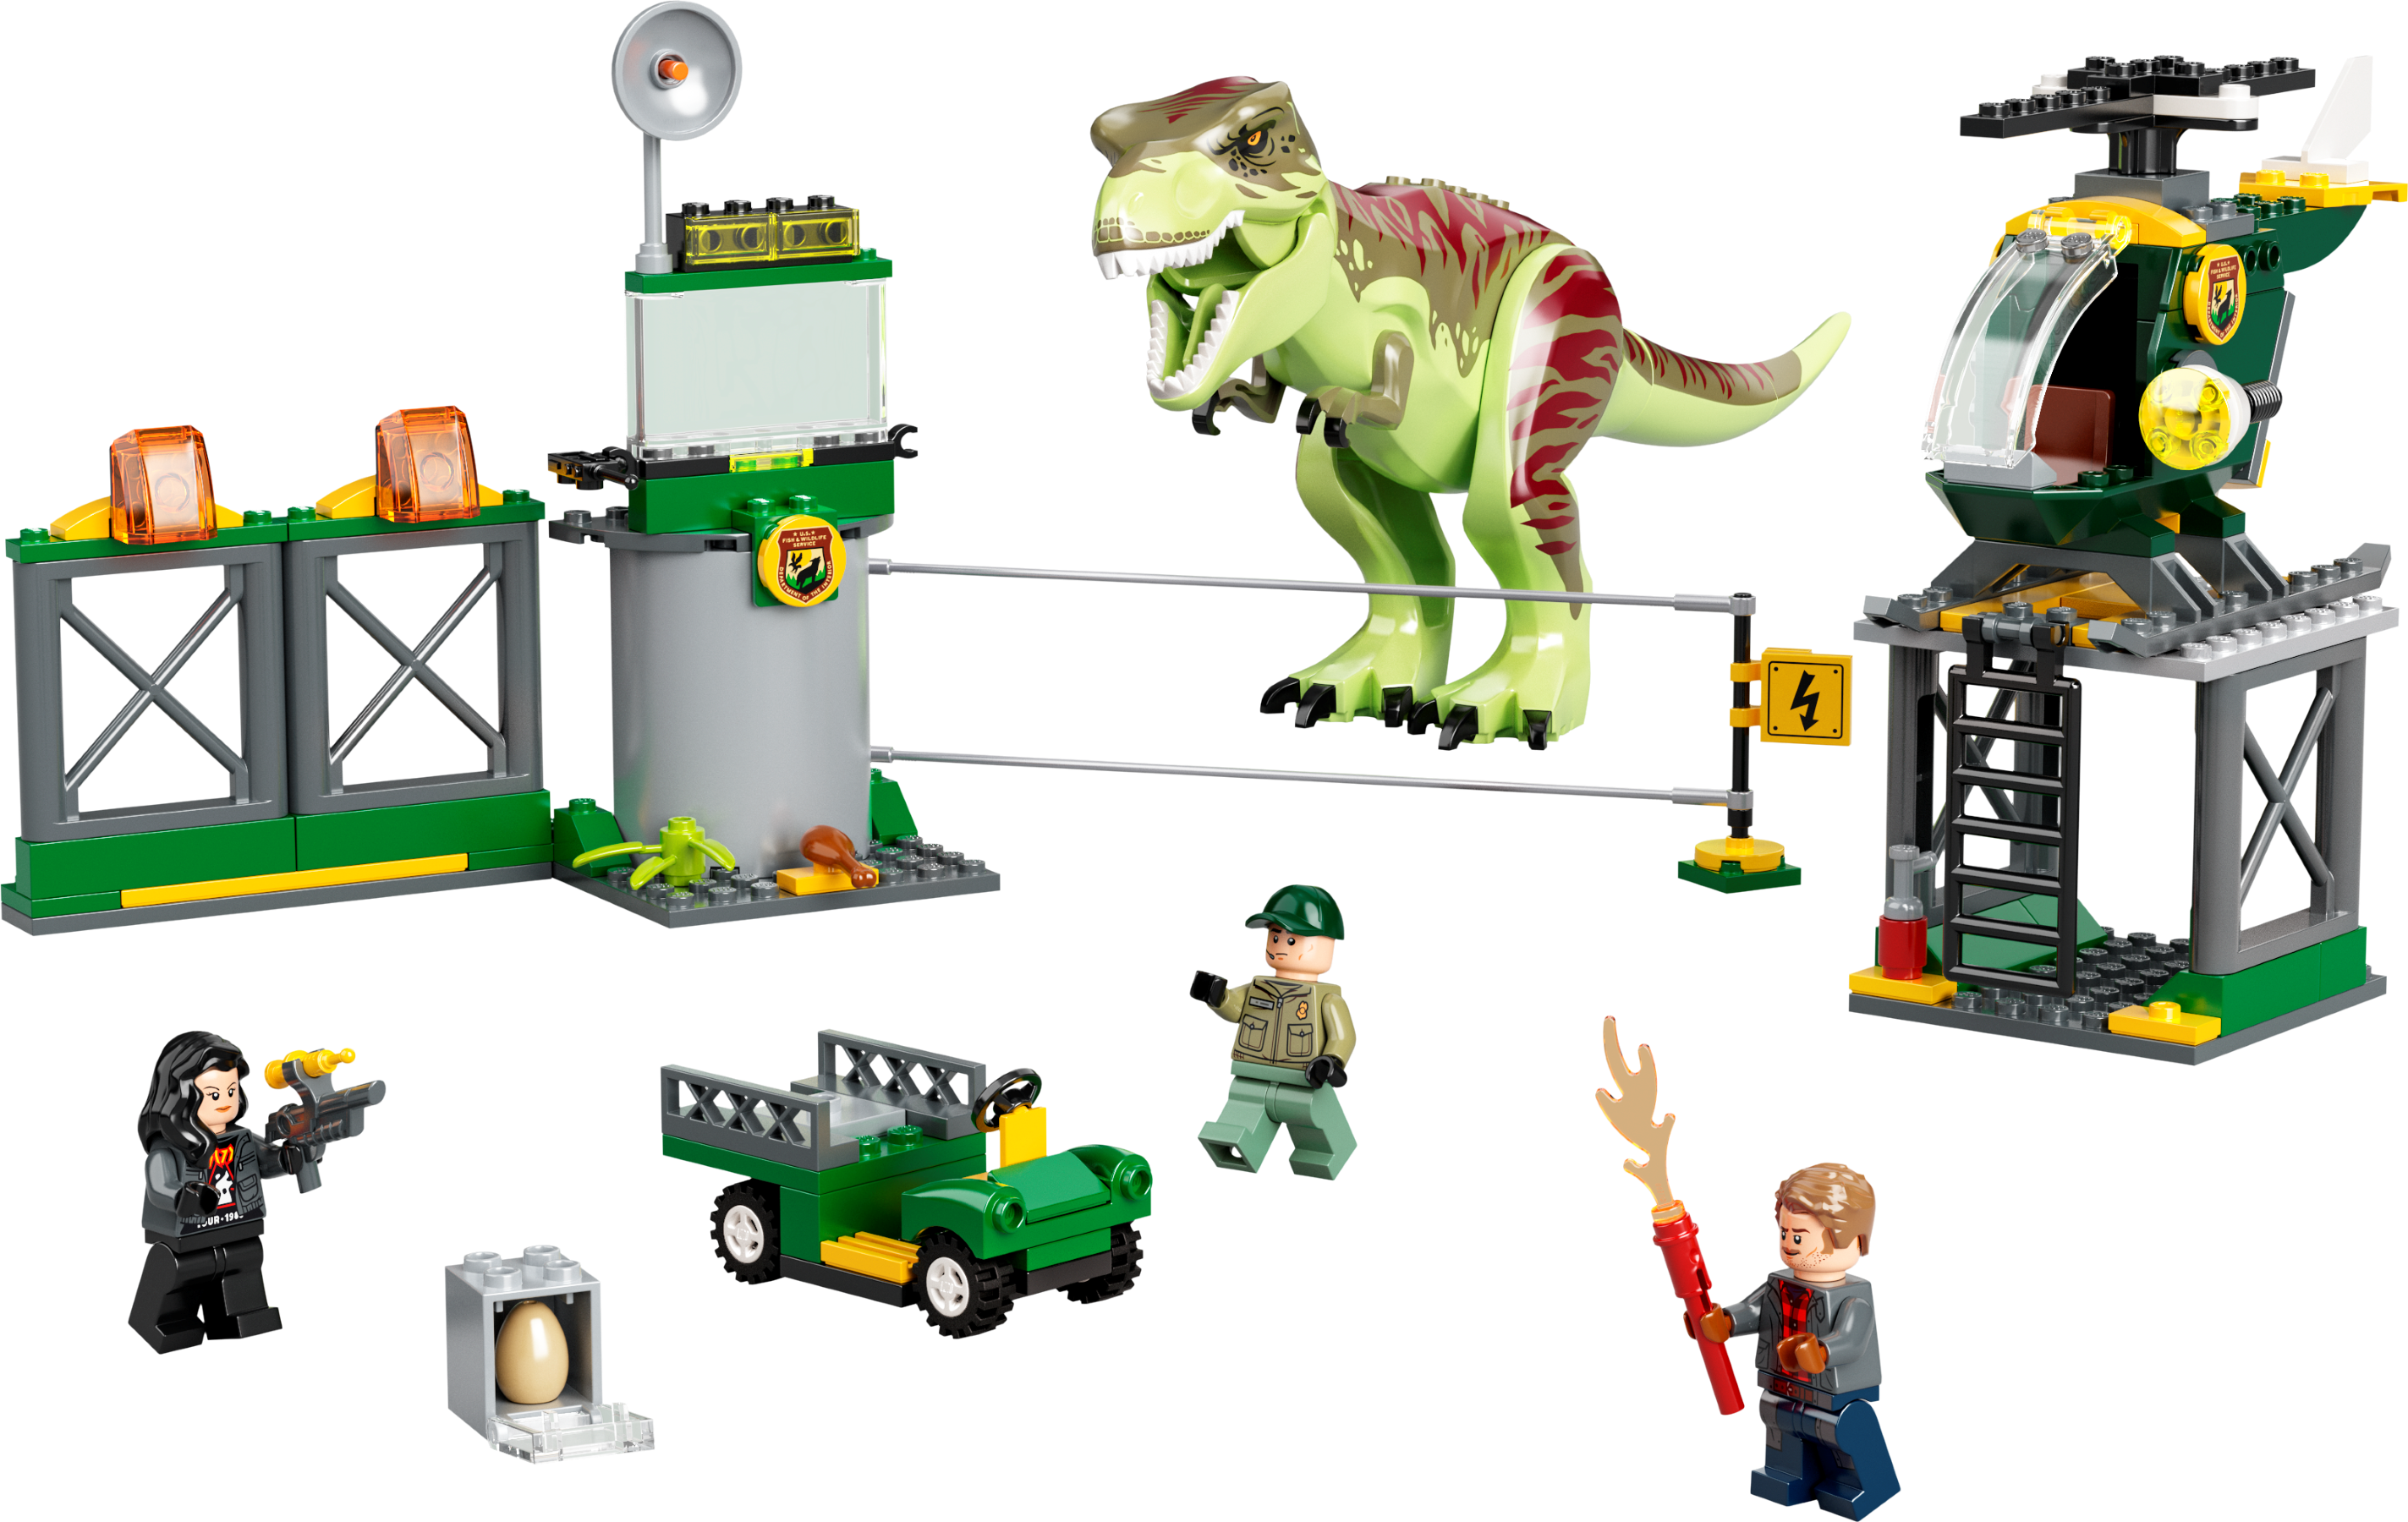 8 Piece Jurassic Park World Dinosaur Minifigure Building Blocks Fit Lego Toys 